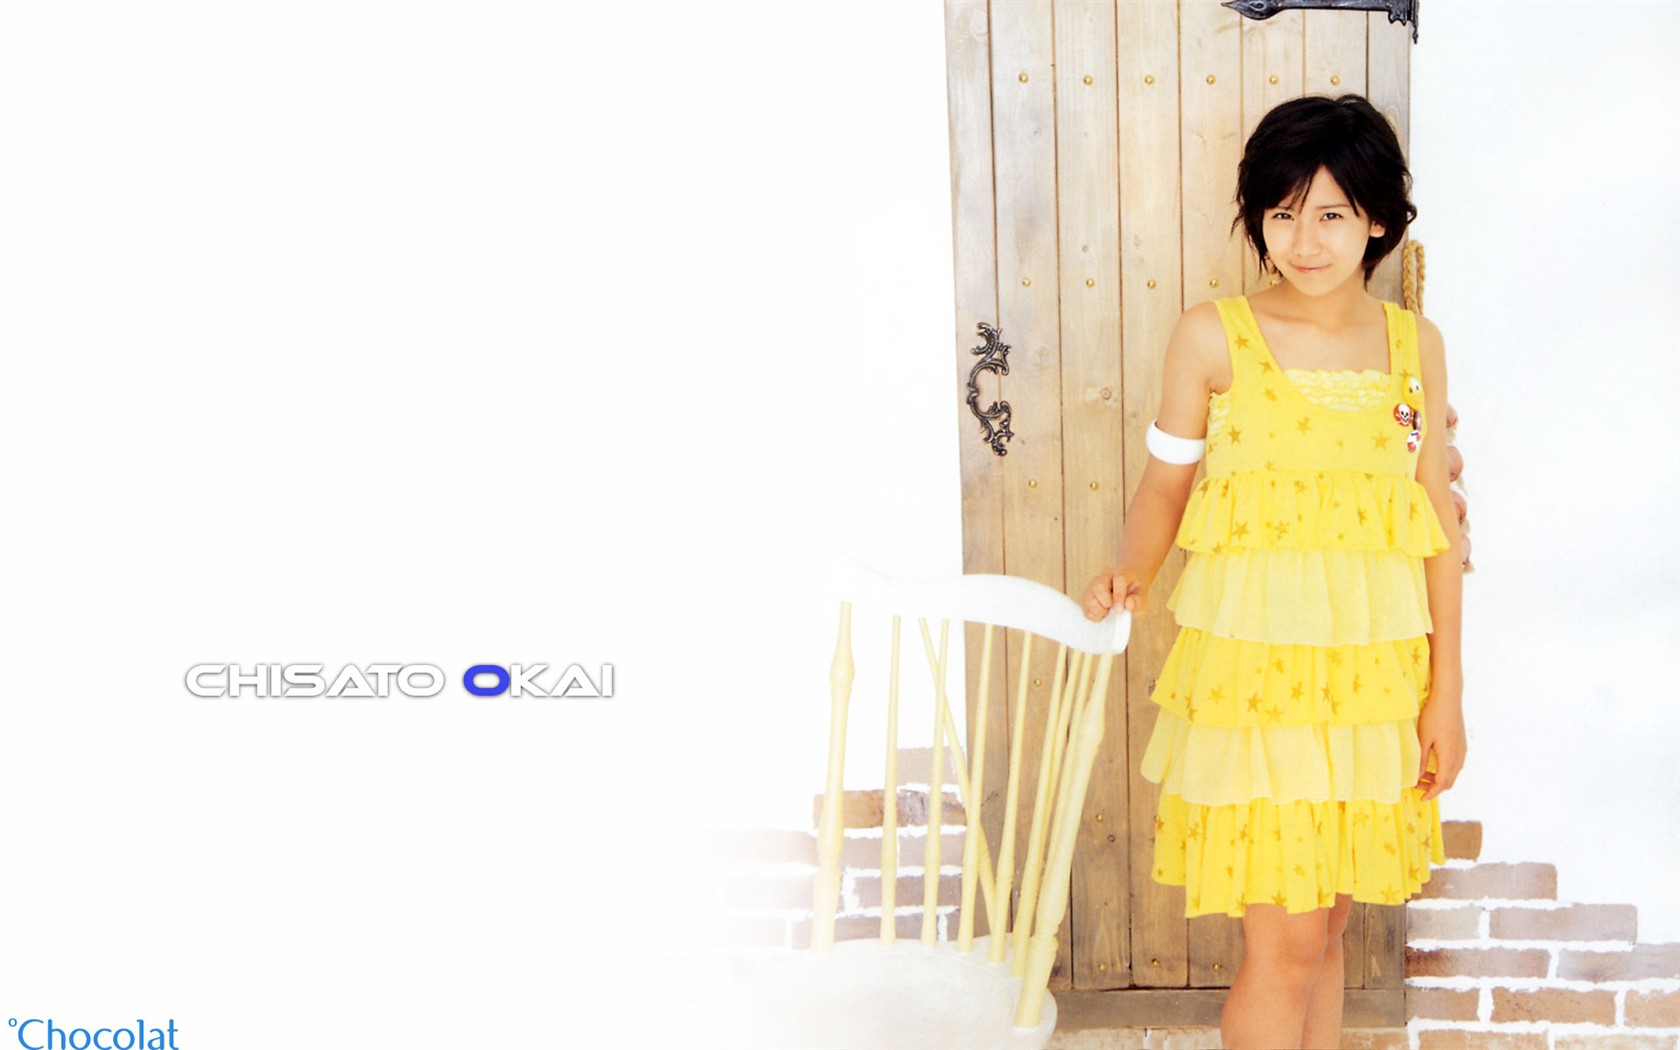 Cute Japanese beauty photo portfolio #6 - 1680x1050